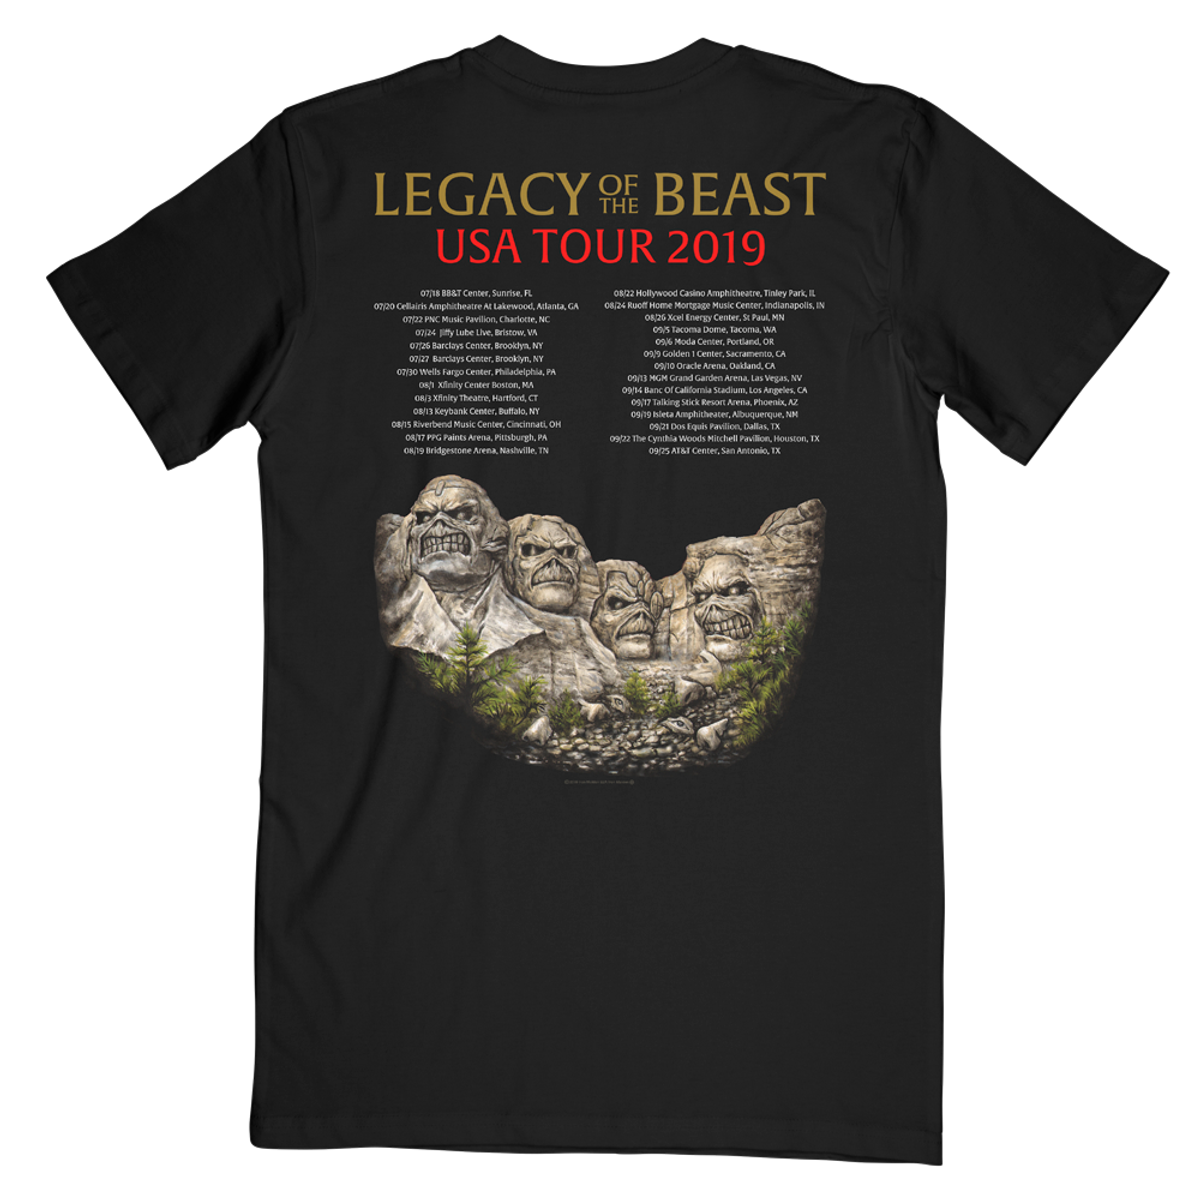 legacy-of-the-beast-2019-tour-usa-tee?u=aHR0cHM6Ly9tdXNpY2dsdWUtdXNlci1hcHAtcC0xLXAuczMuYW1hem9uYXdzLmNvbS9vcmlnaW5hbHMvYmU1ODY2NzgtZjM1NC00OGI4LTk3MTItYWE3MWU1ZWM2M2Nh&width=1200&mode=contain